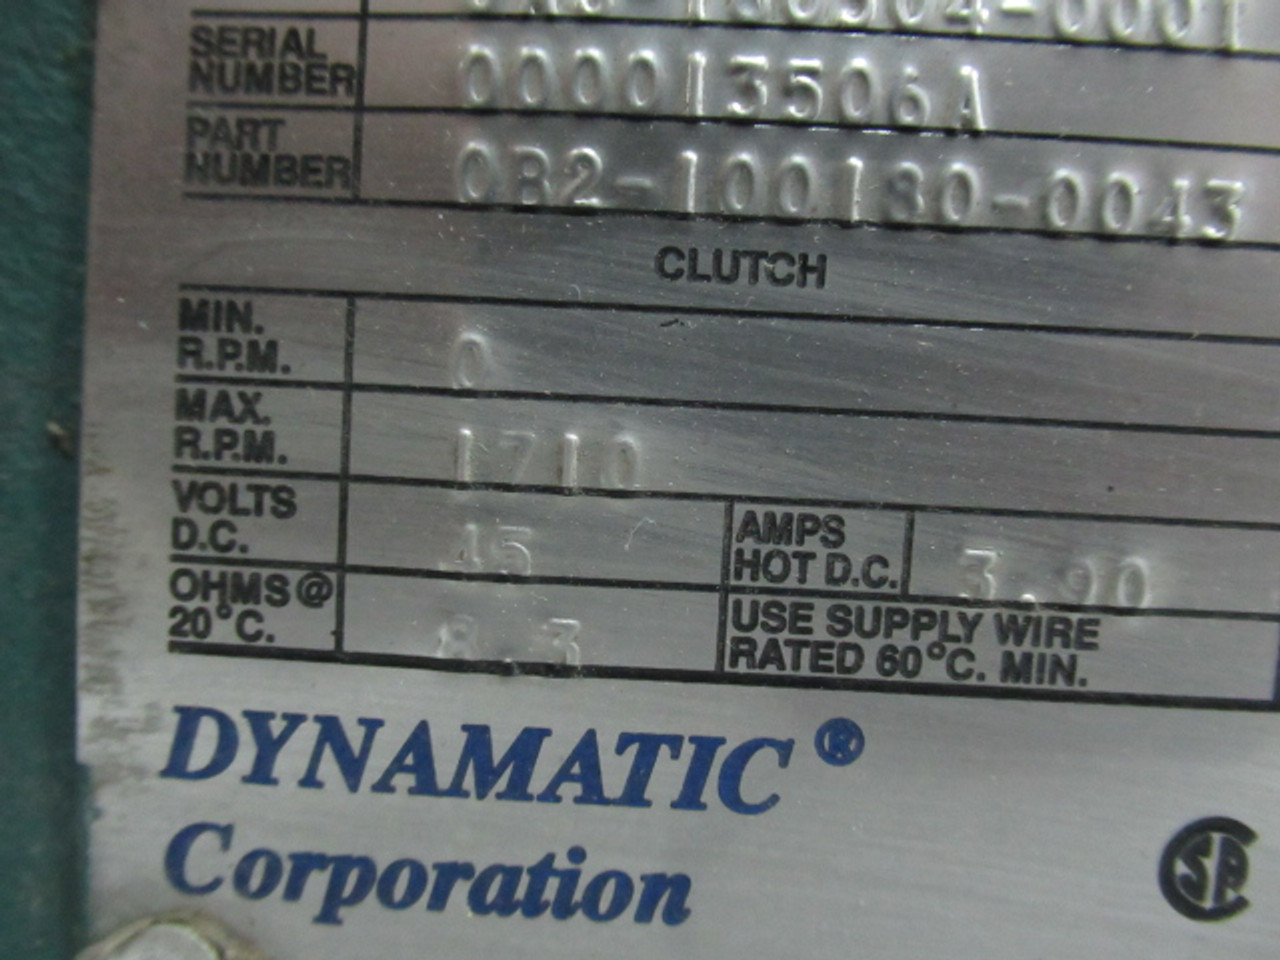 Dynamatic Corp Ajusto-Spede Drive C/W Clutch 3HP 1750RPM 575V 3PH 3.76A USED